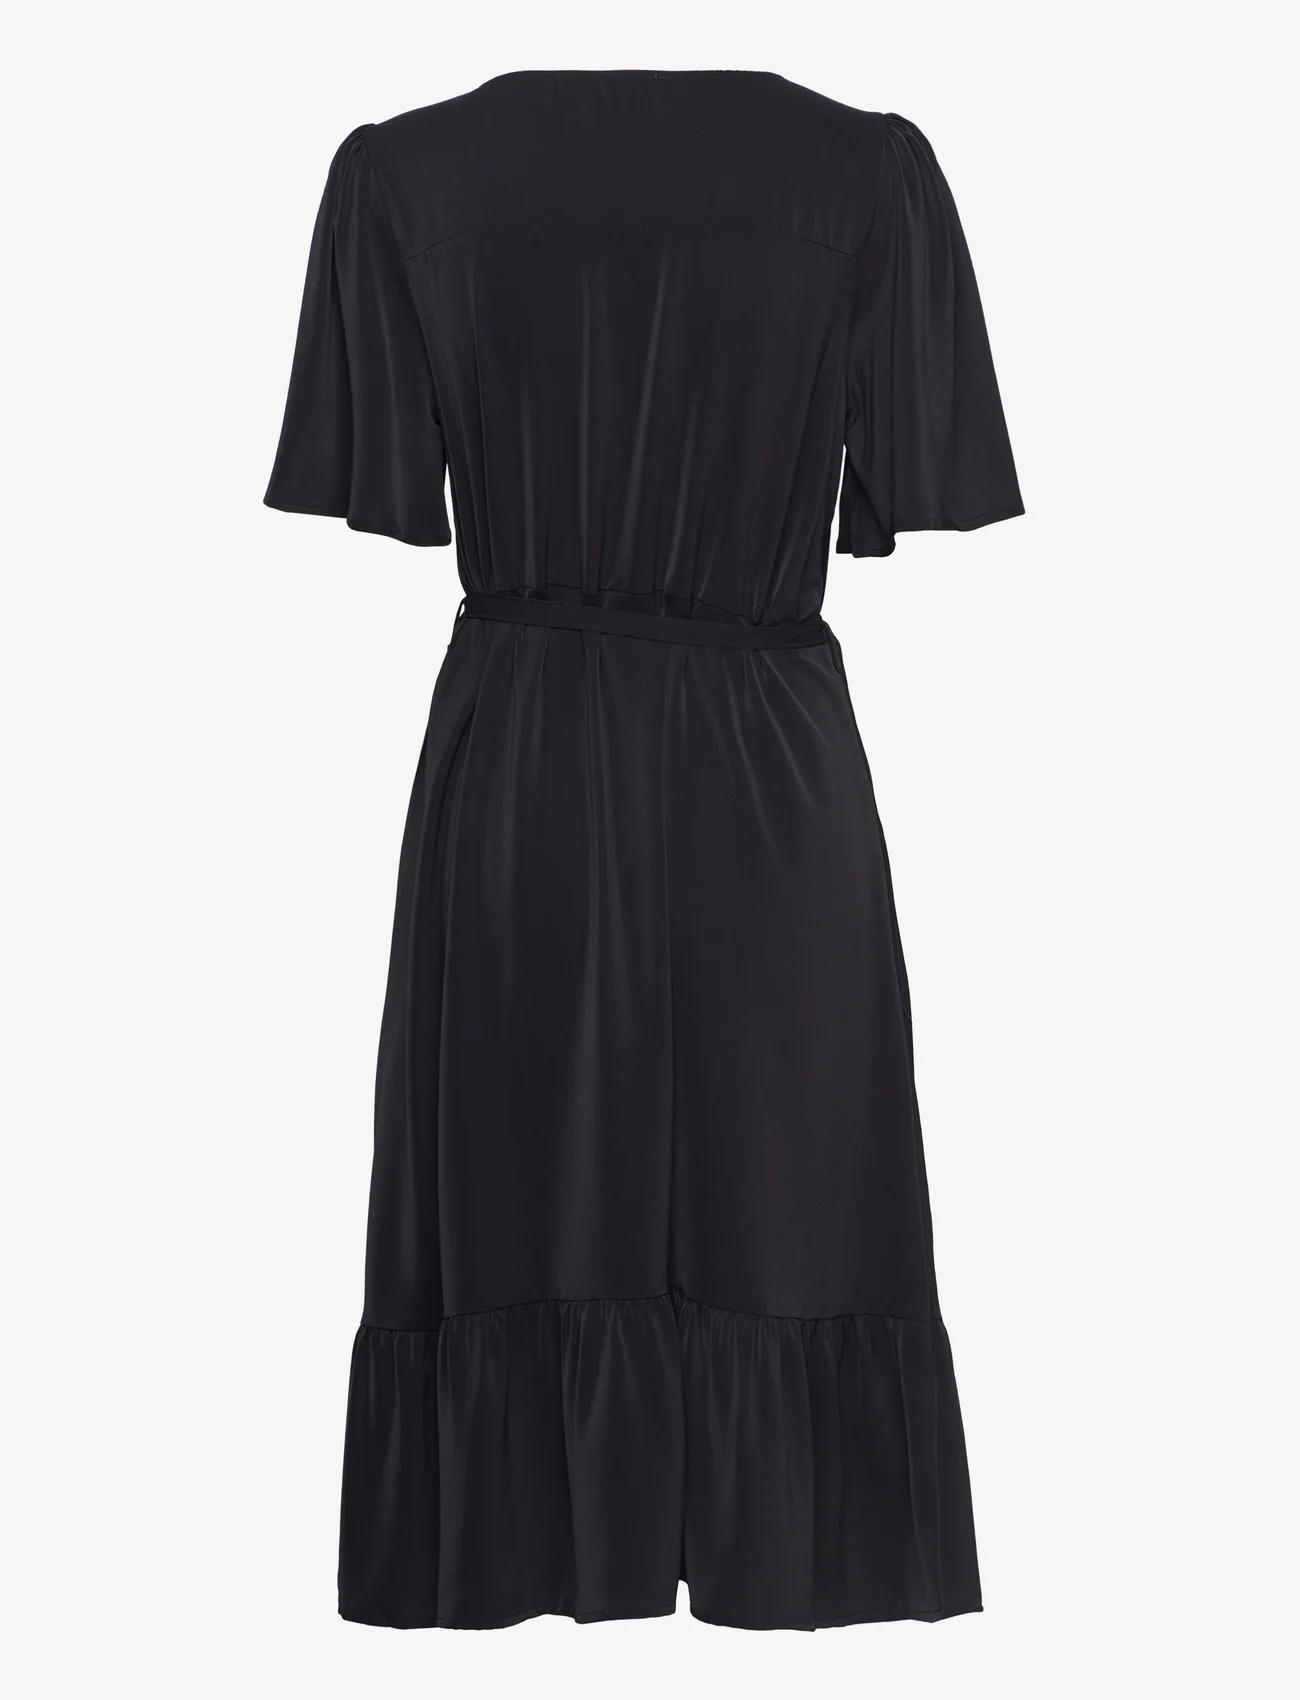 French Connection - HENLEY ANGEL M - marškinių tipo suknelės - black - 1